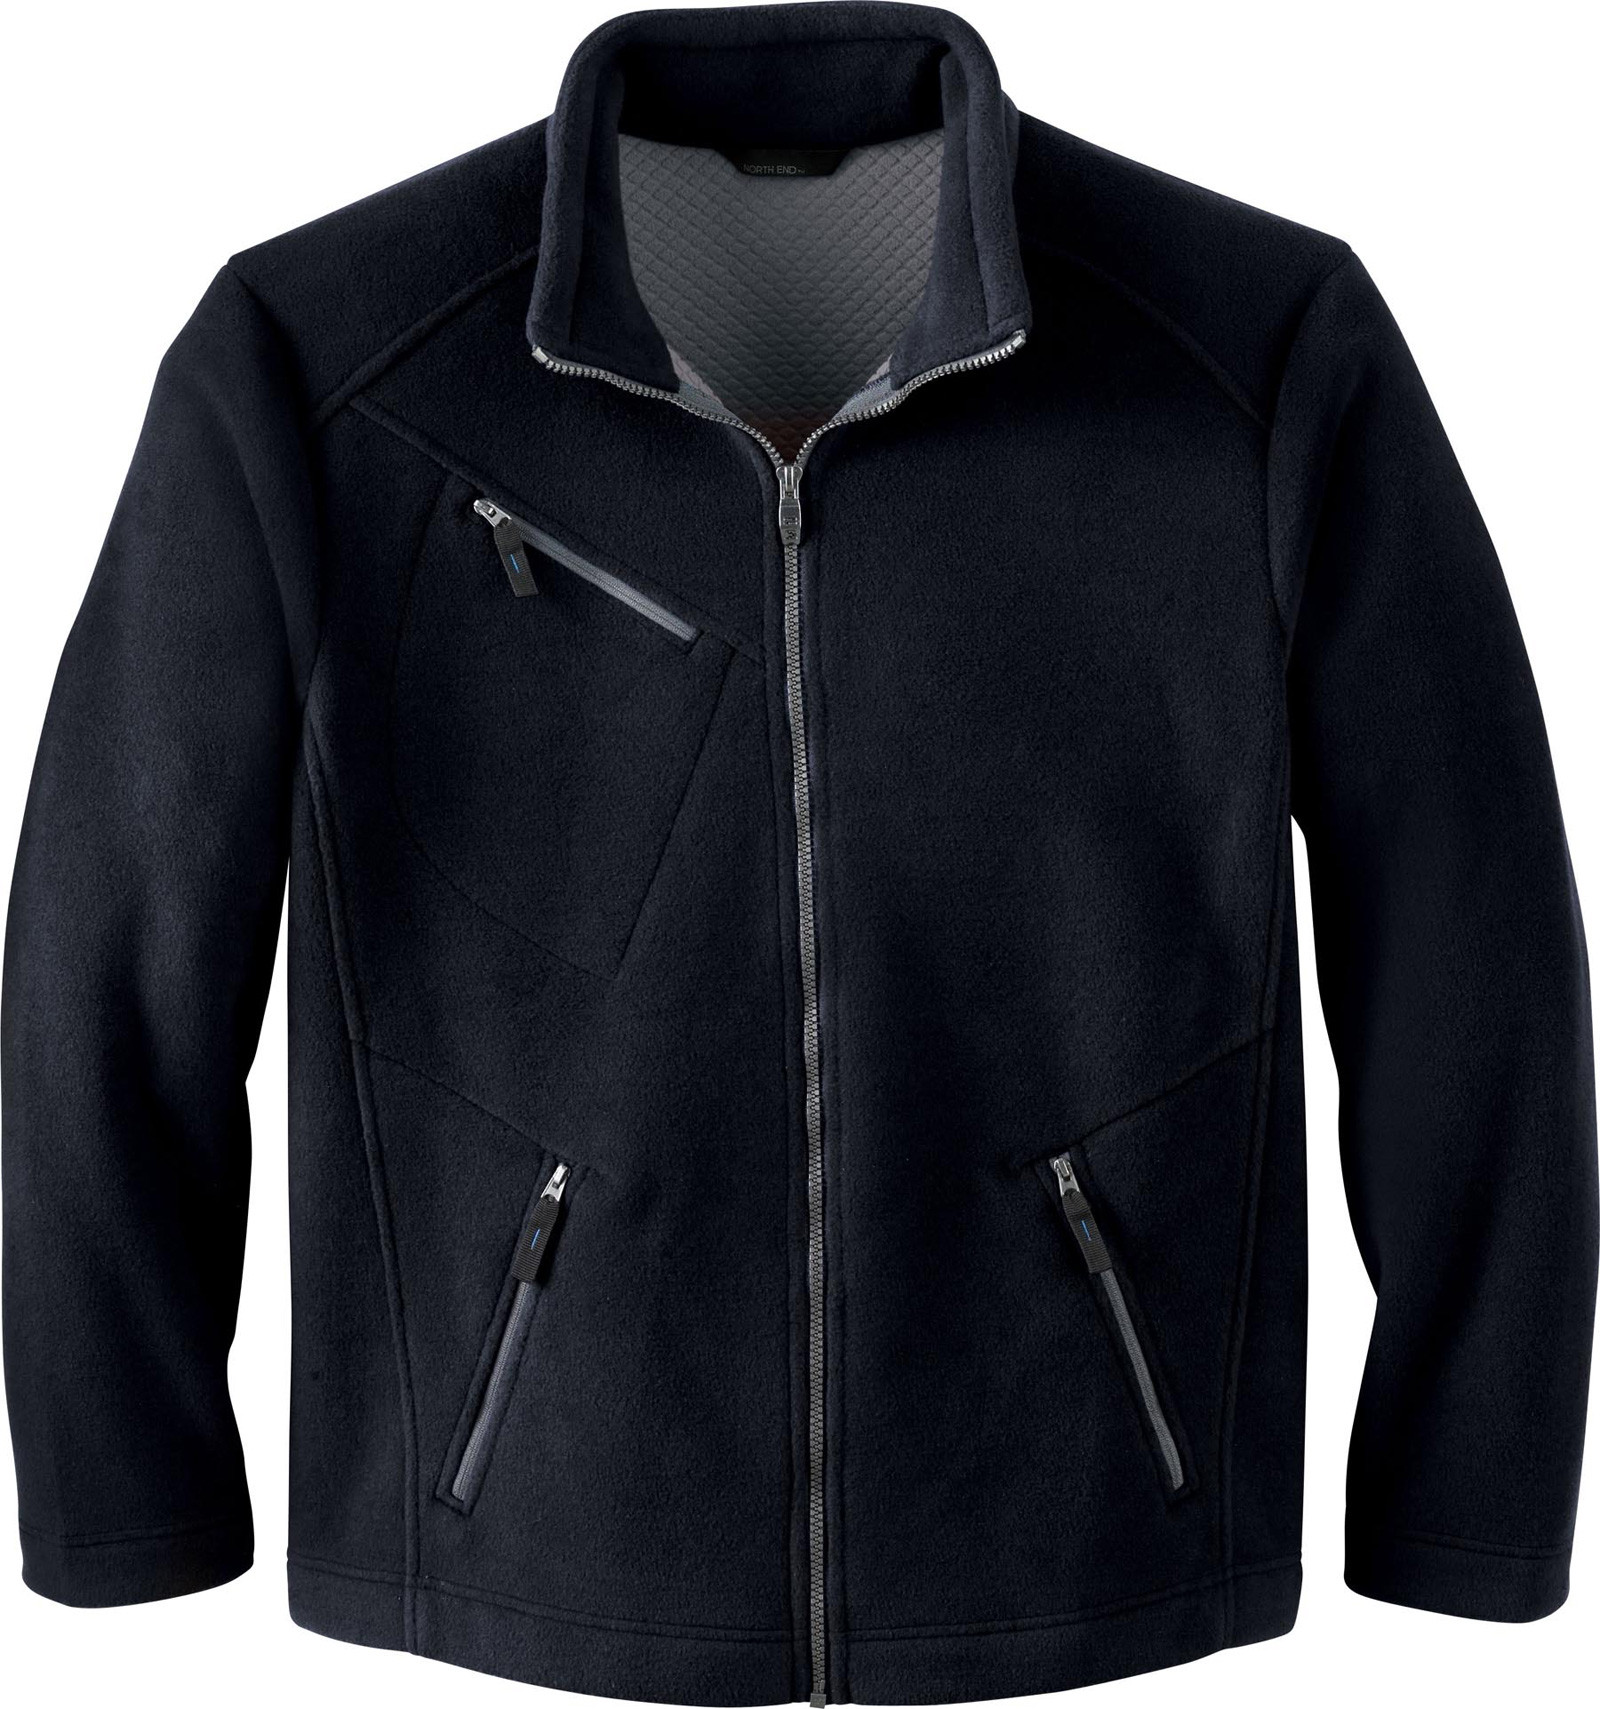 Ash City Bonded Fleece 88157 - Men's Bonded Jacqoard Fleece Jacket $40.54